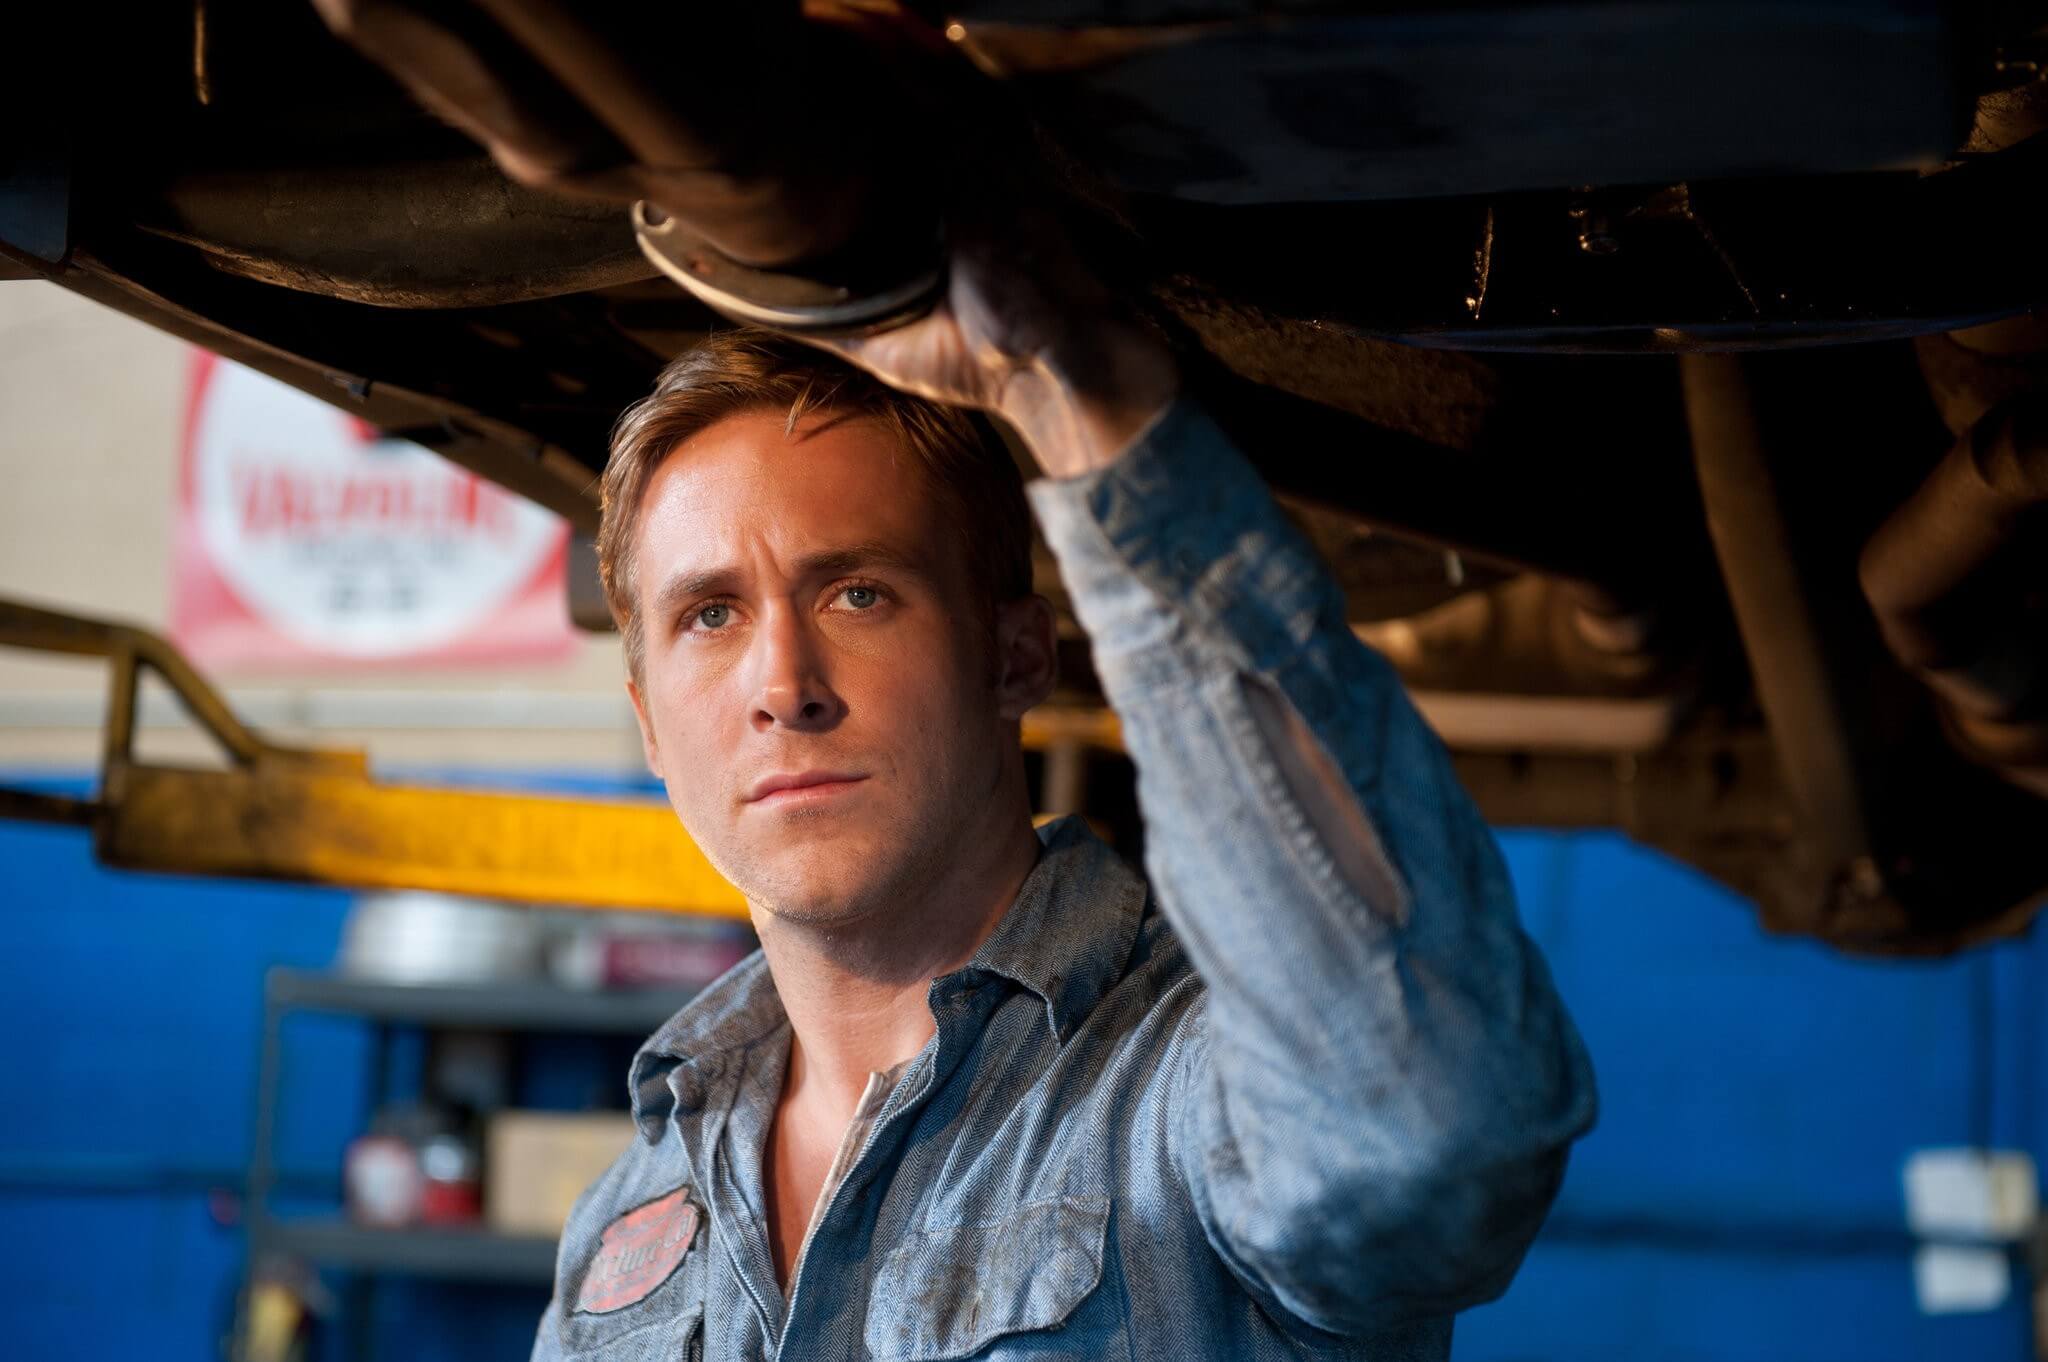 Ryan Gosling in Drive, cast in Barbie film